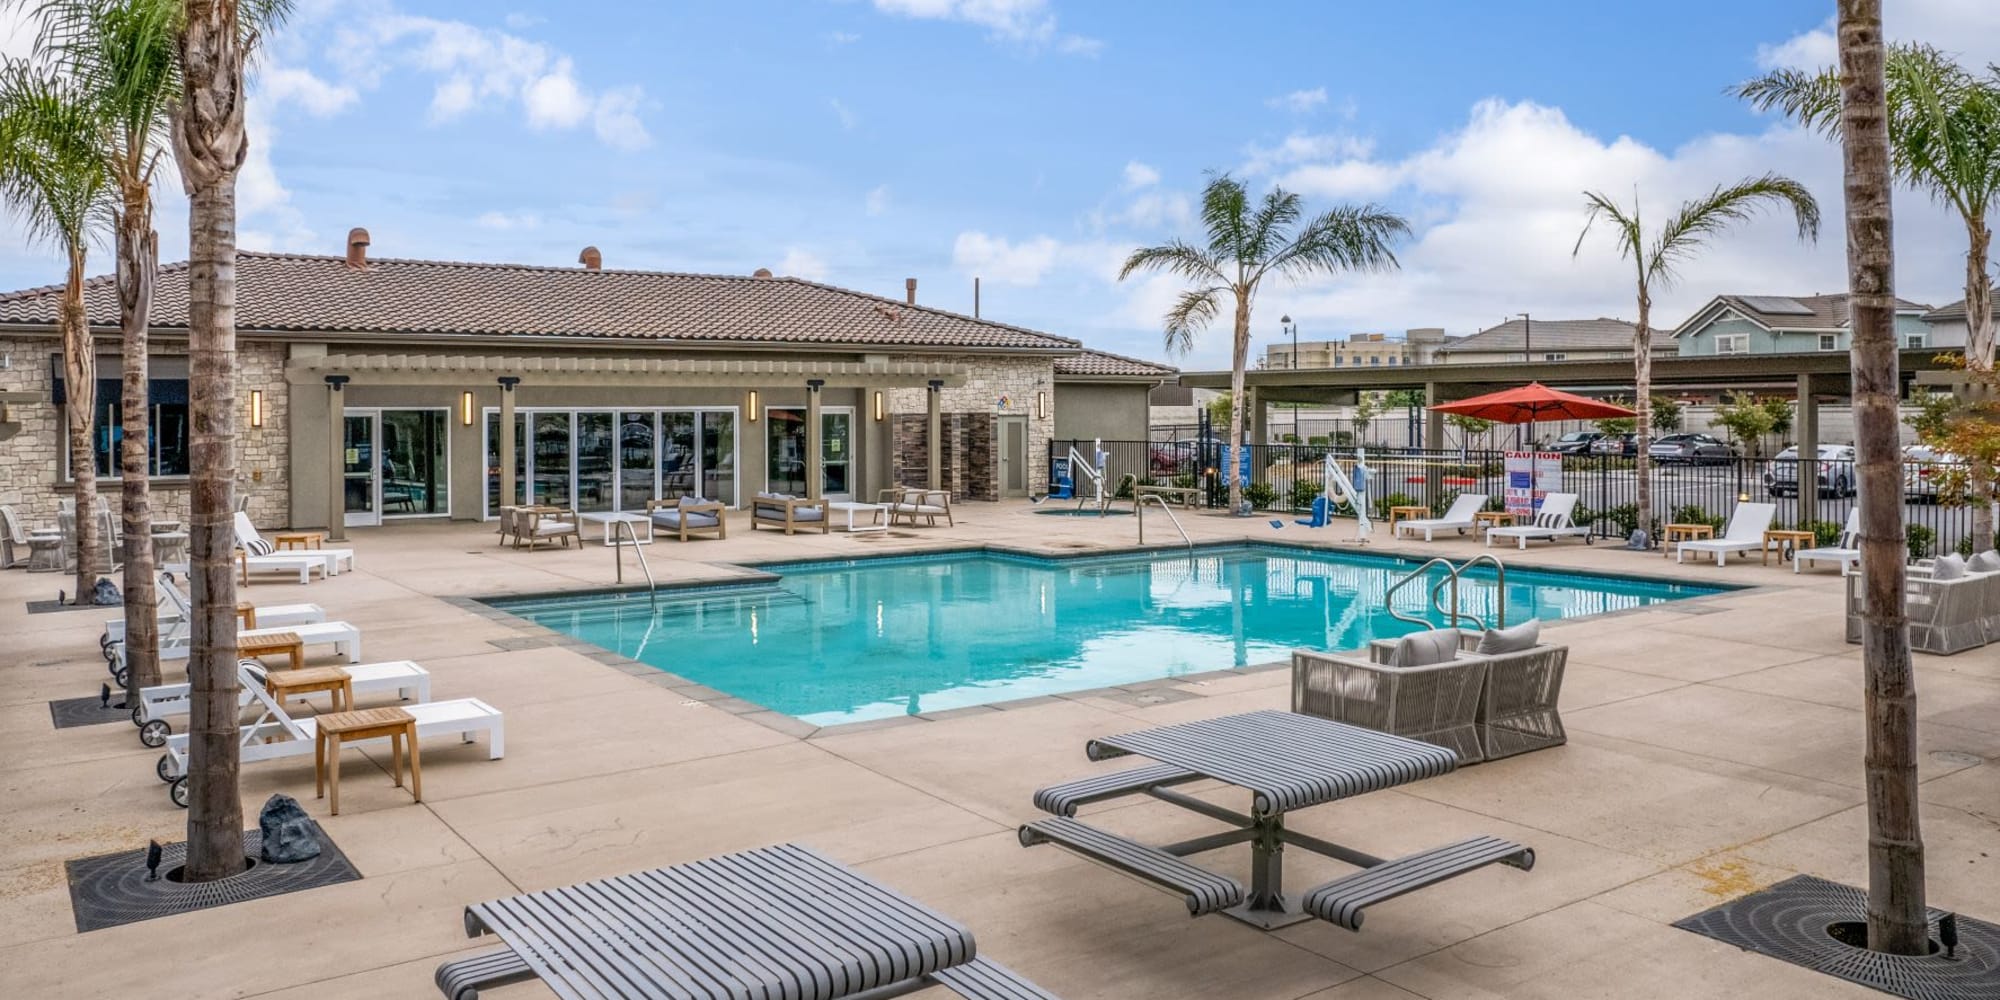 Swimming pool at Towne Centre Apartments in Lathrop, California